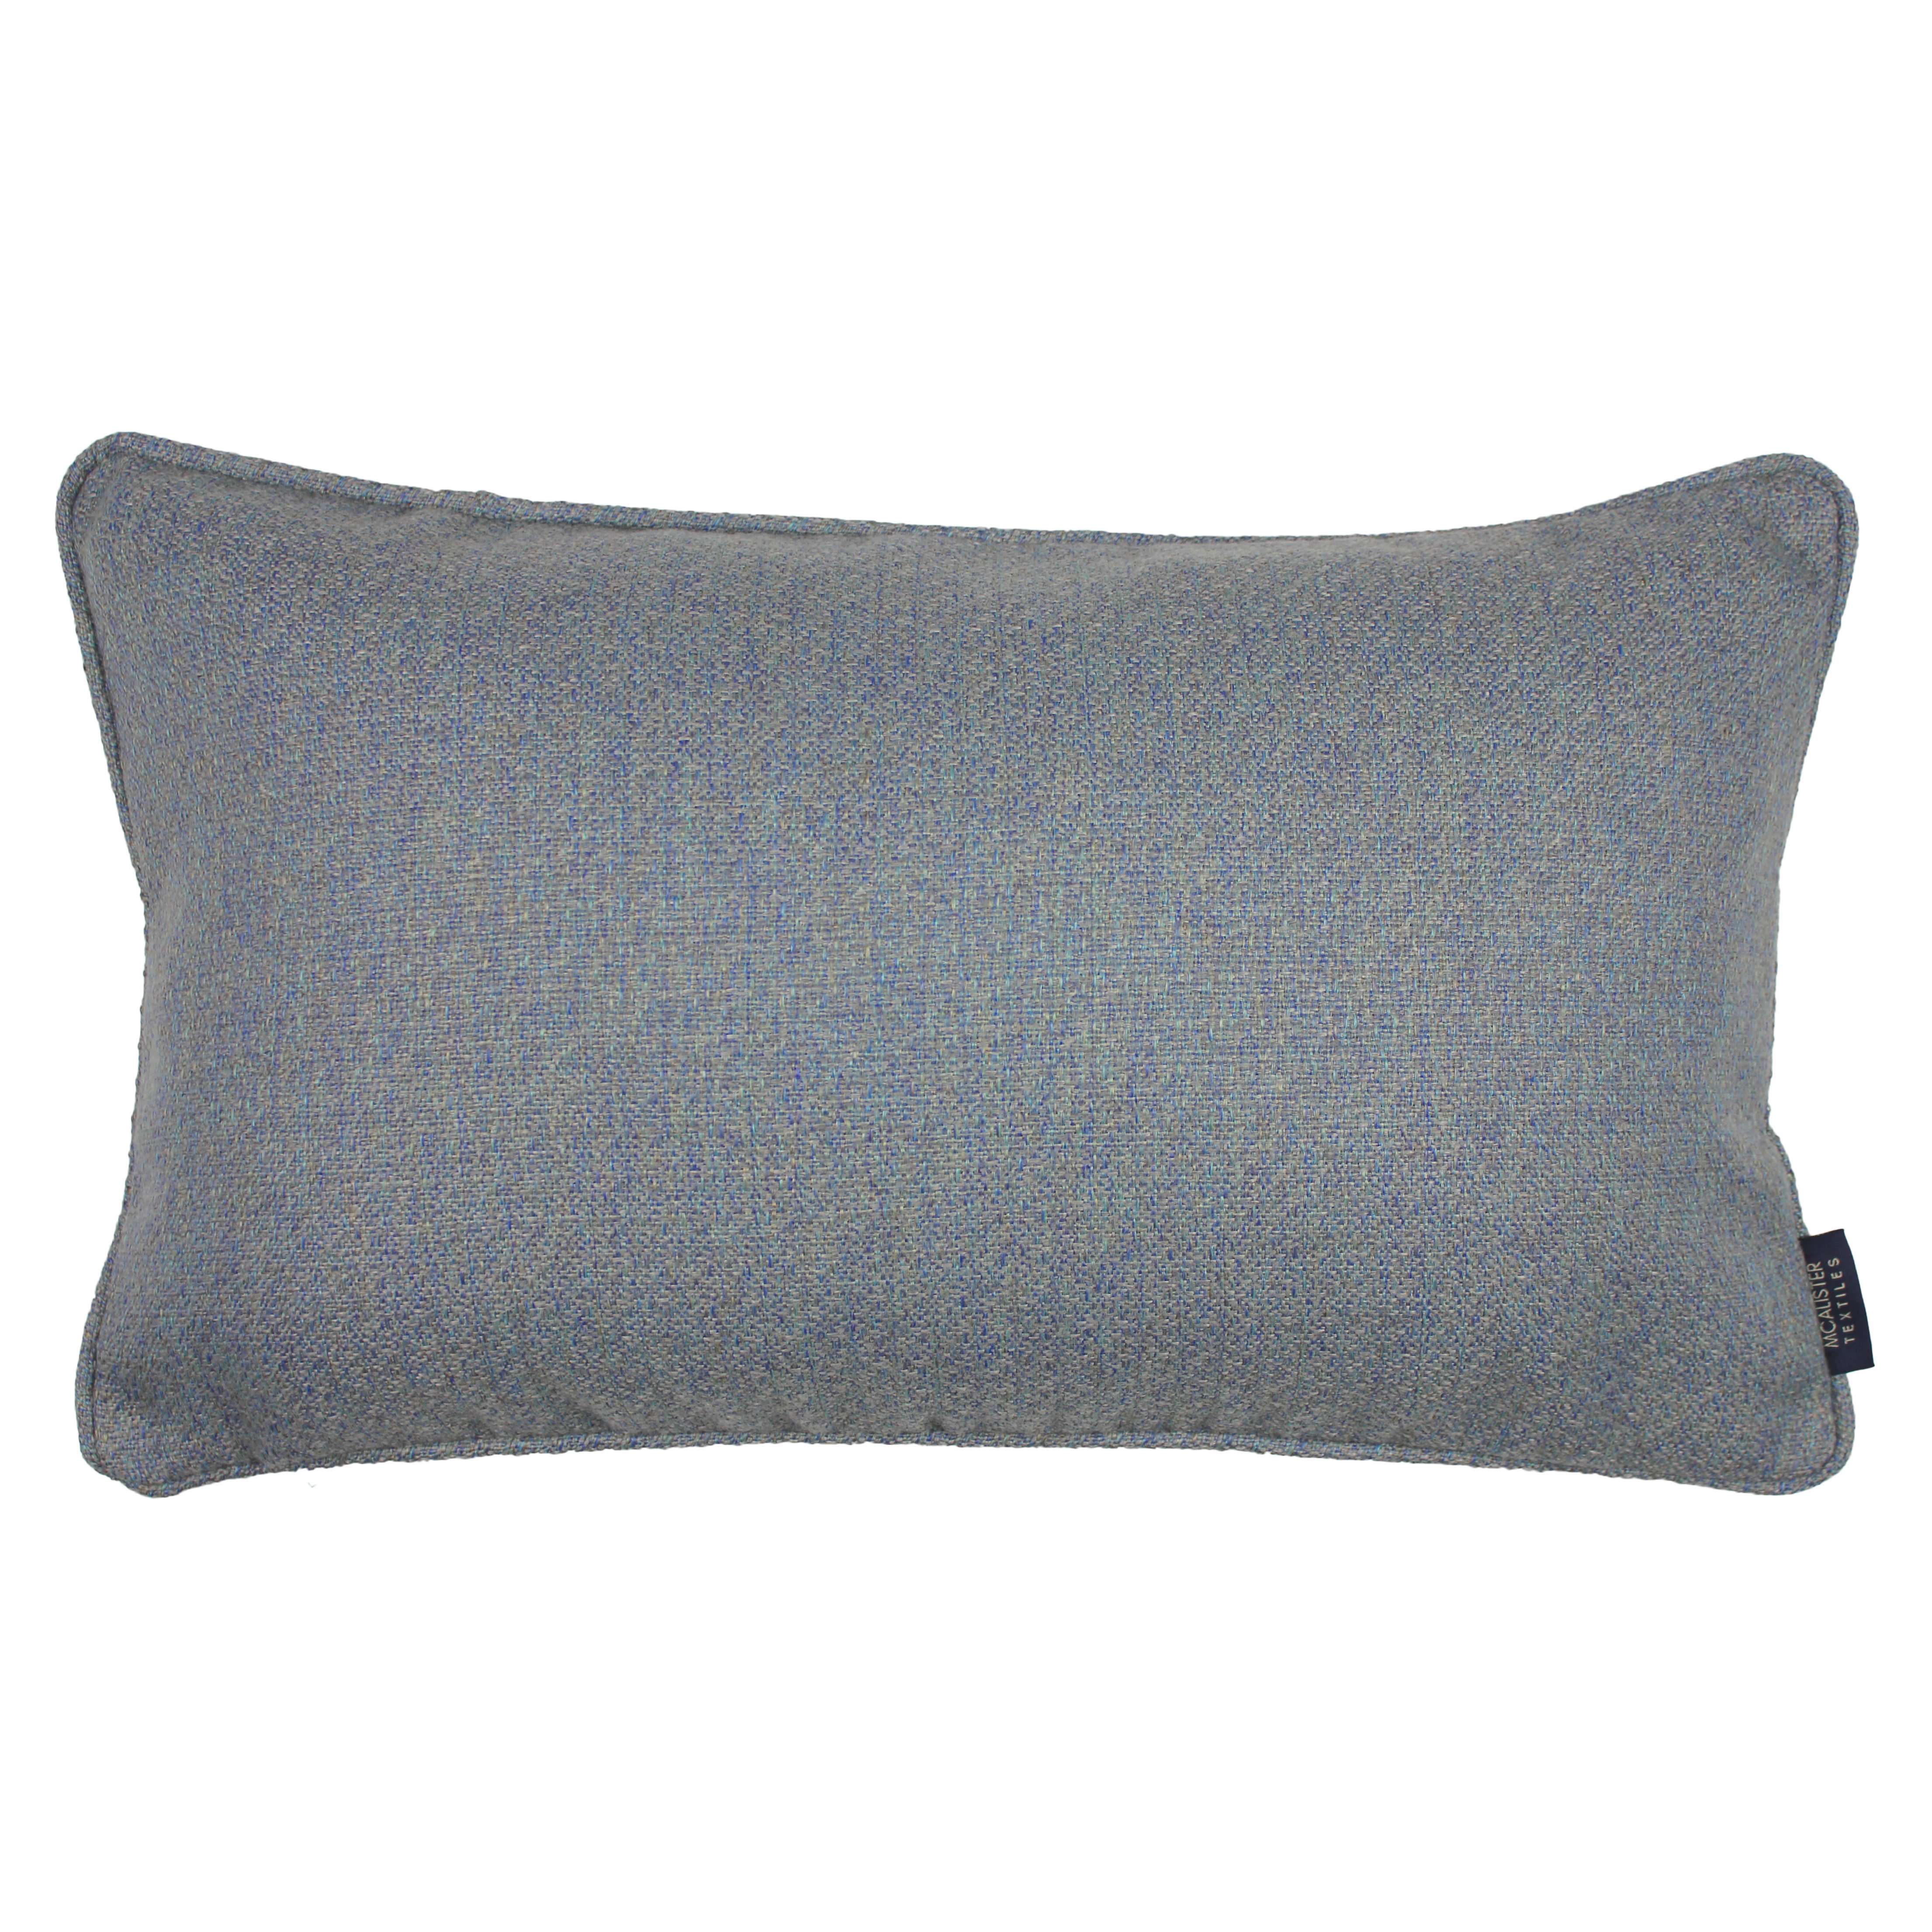 McAlister Textiles Highlands Blue Textured Plain Pillow Pillow Cover Only 50cm x 30cm 